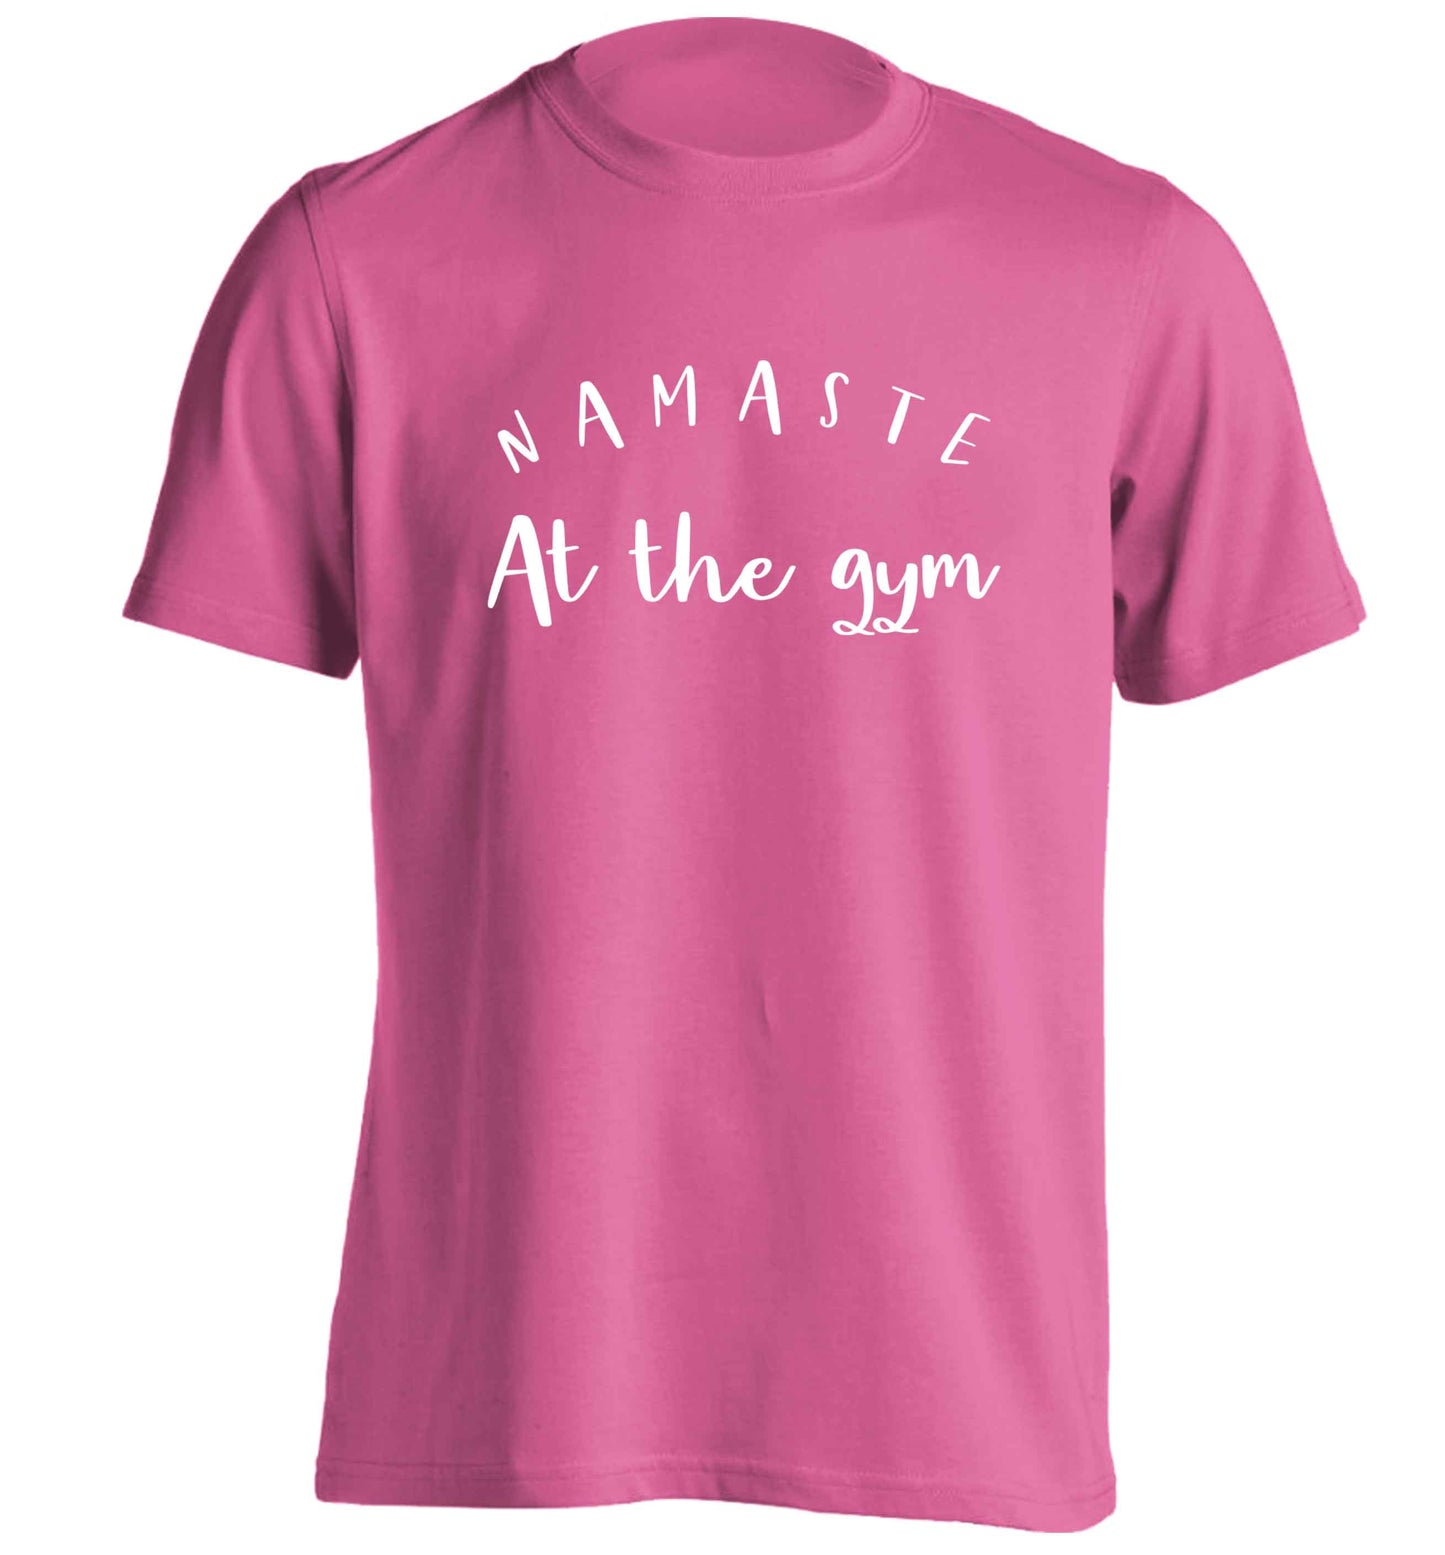 Namaste at the gym adults unisex pink Tshirt 2XL